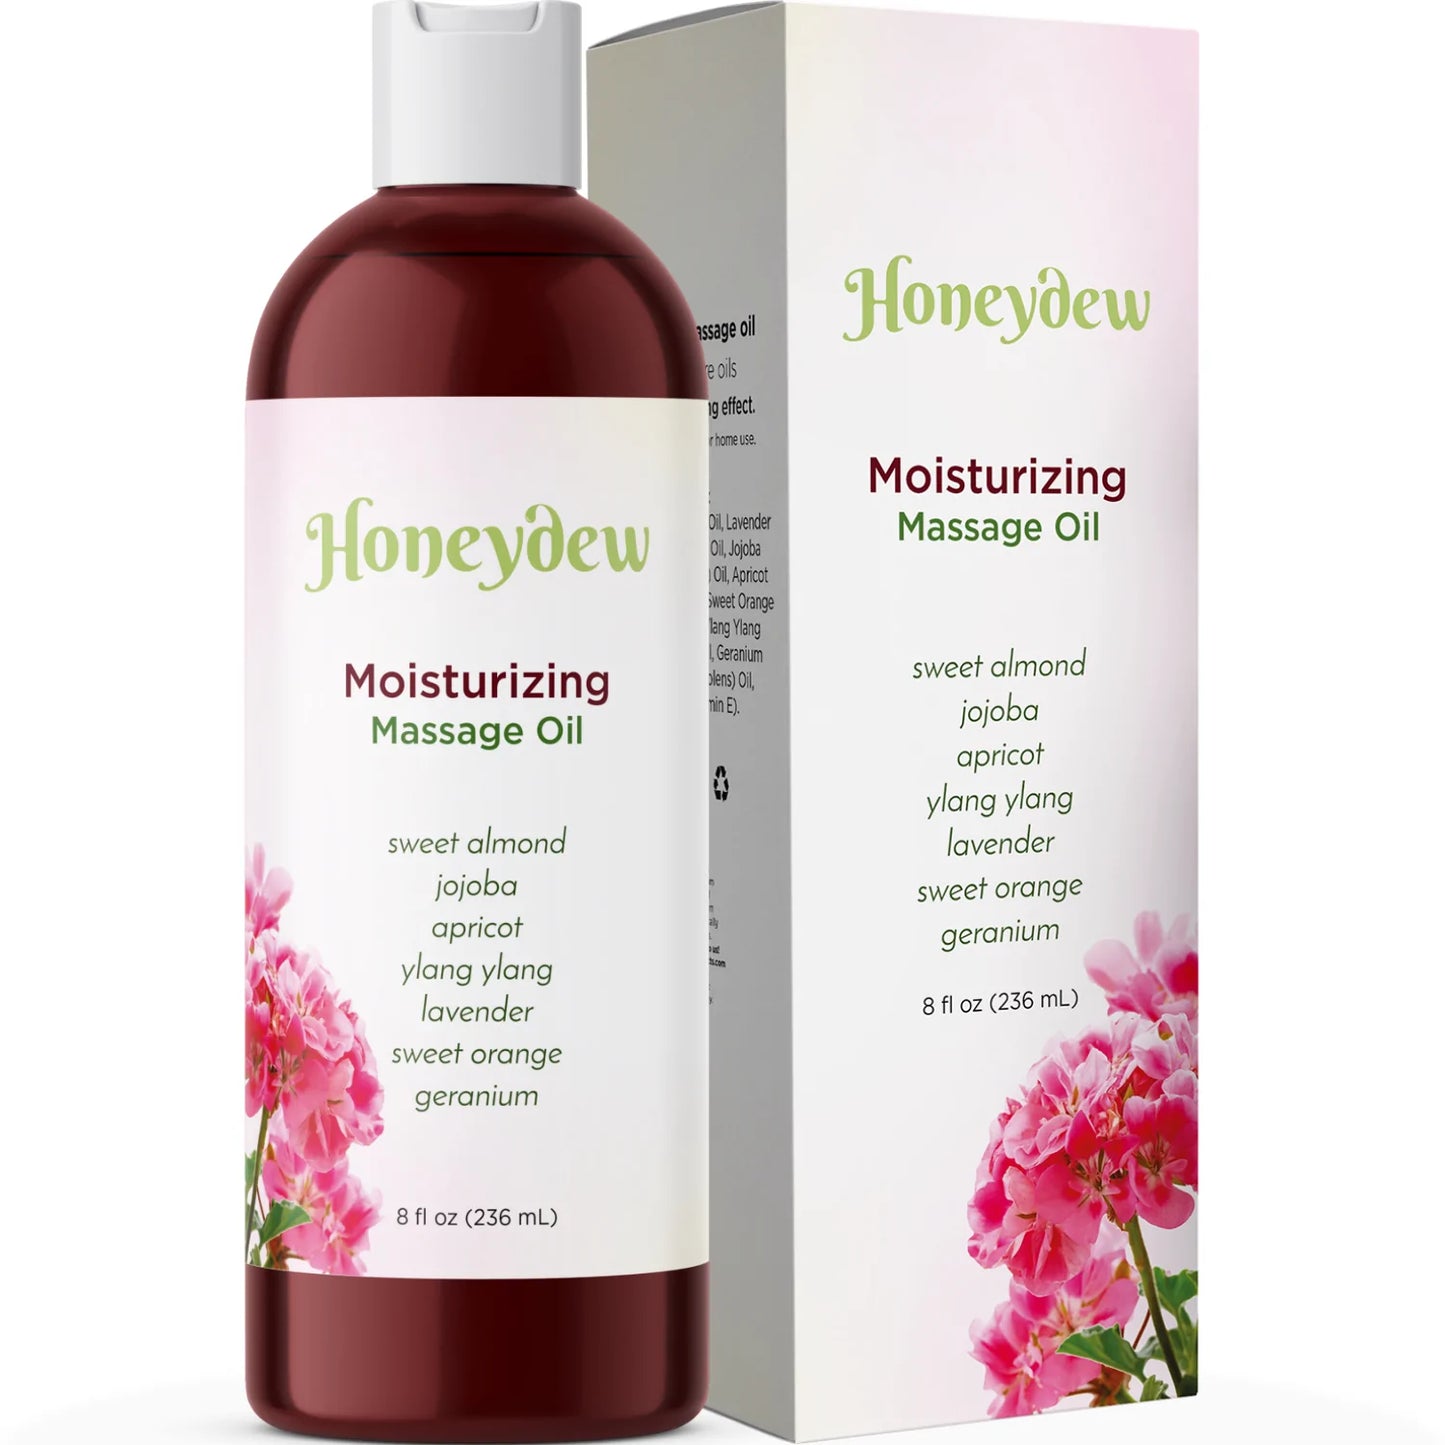 Honeydew Moisturizing Massage Oil